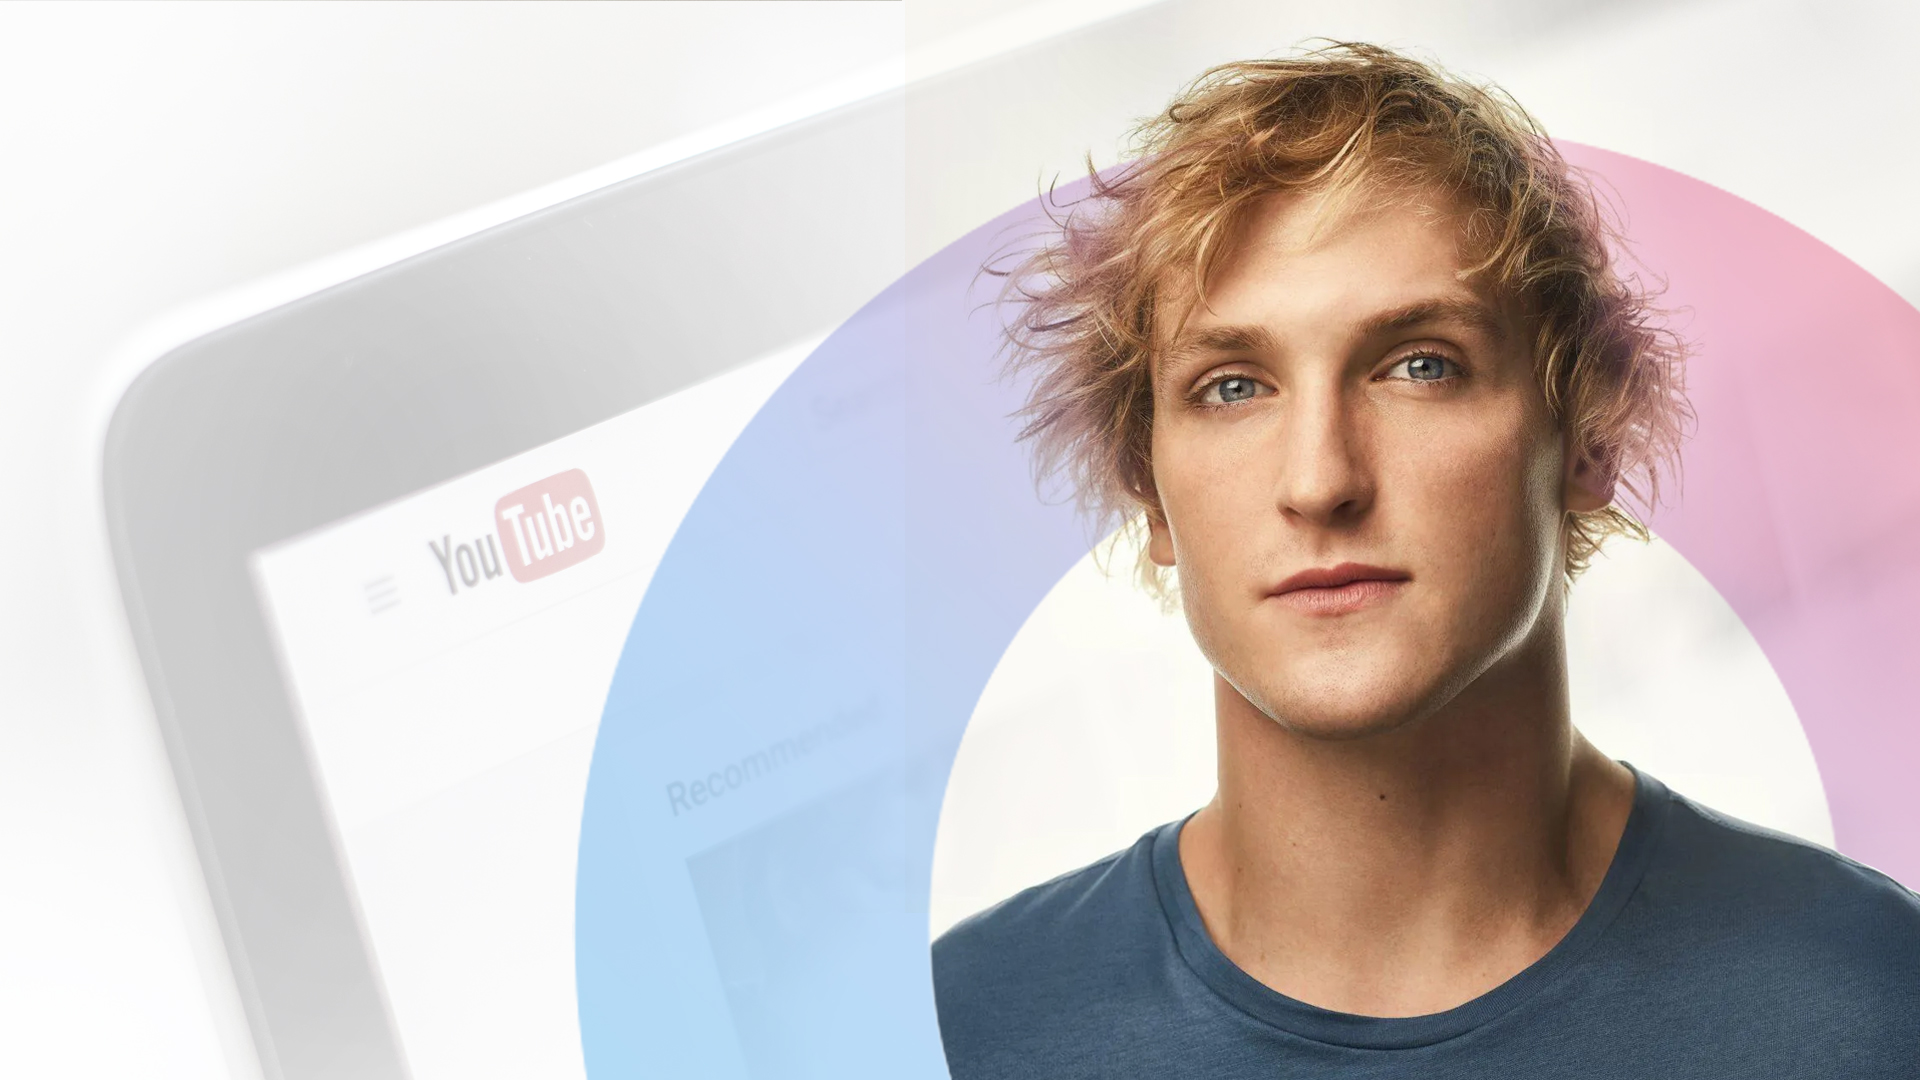 Logan Paul Switch Social Media Platform from Vine to YouTube as a Creator Dubai ICON